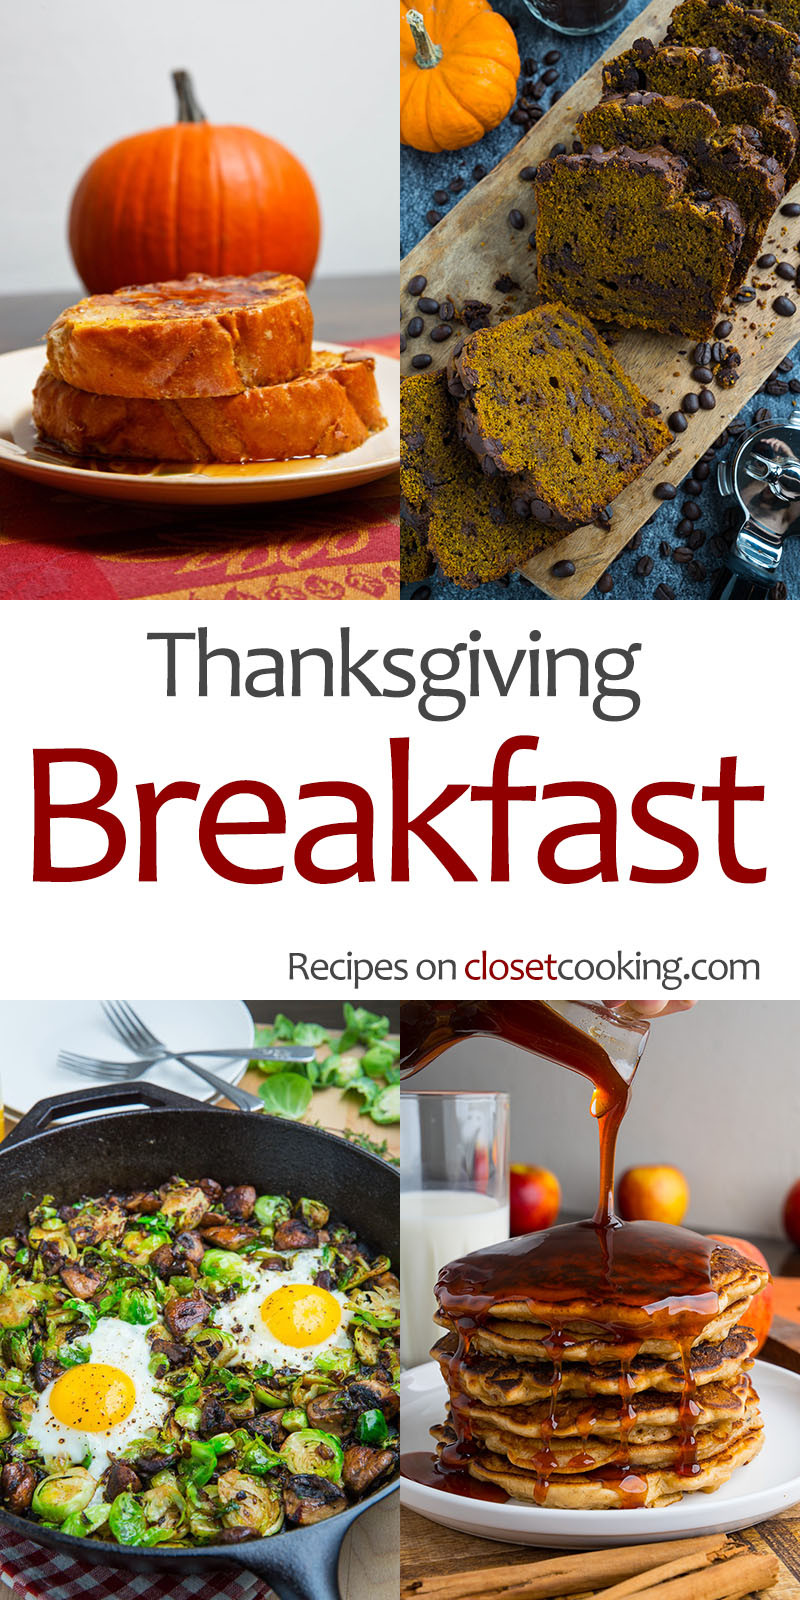 Thanksgiving Breakfast Ideas
 Thanksgiving Breakfast Recipes Closet Cooking